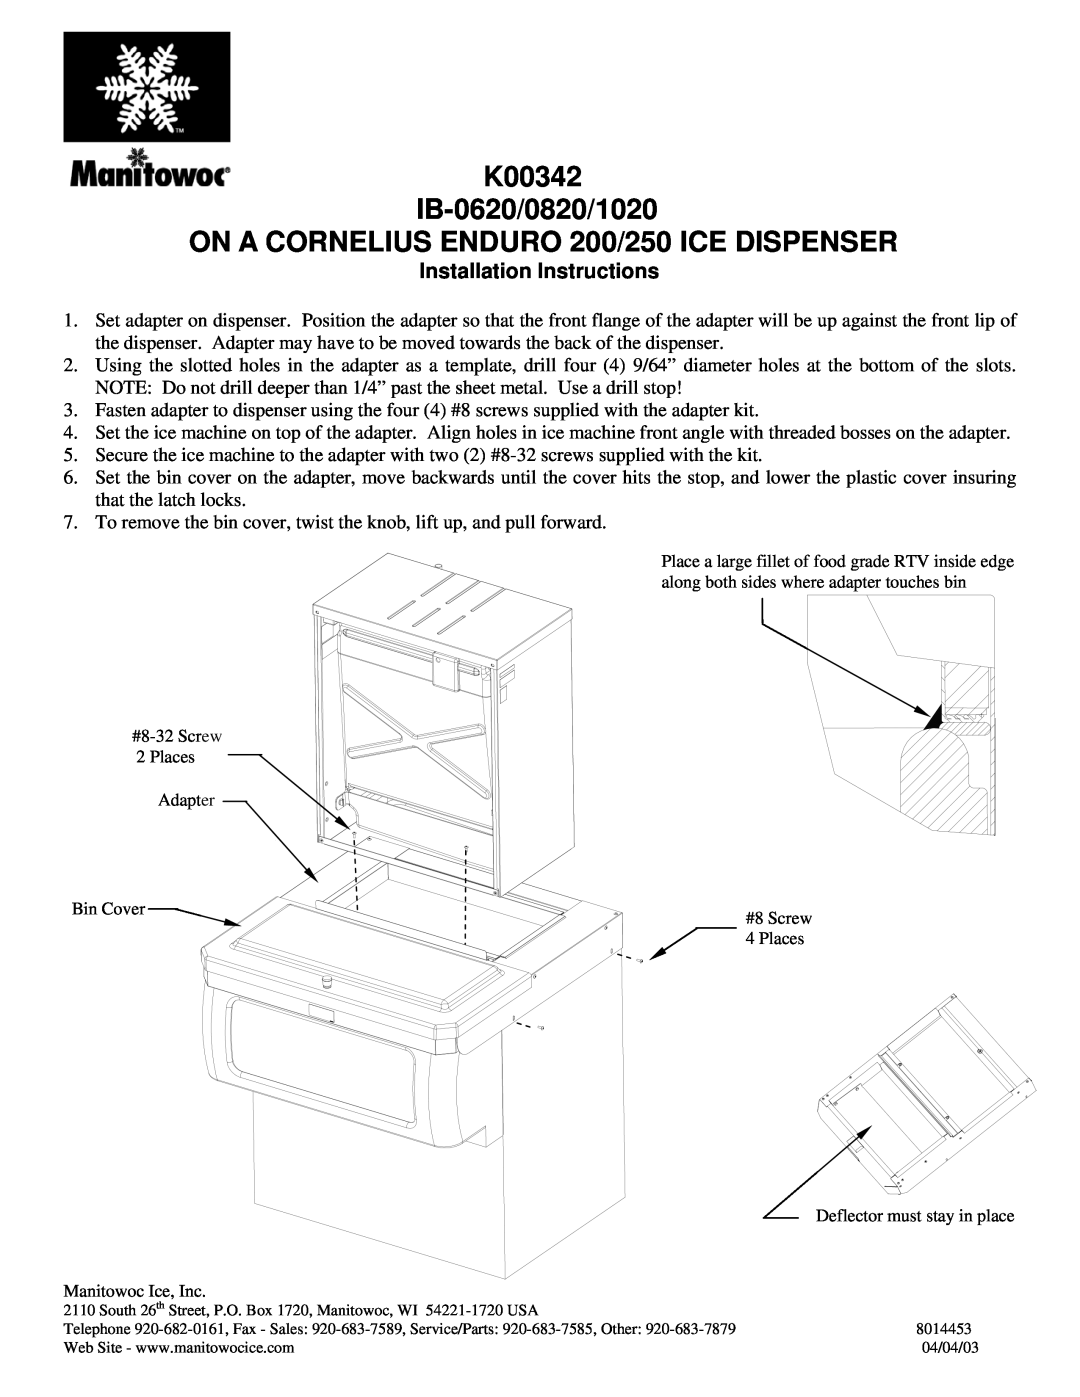 Manitowoc Ice installation instructions K00342 IB-0620/0820/1020, ON A CORNELIUS ENDURO 200/250 ICE DISPENSER 